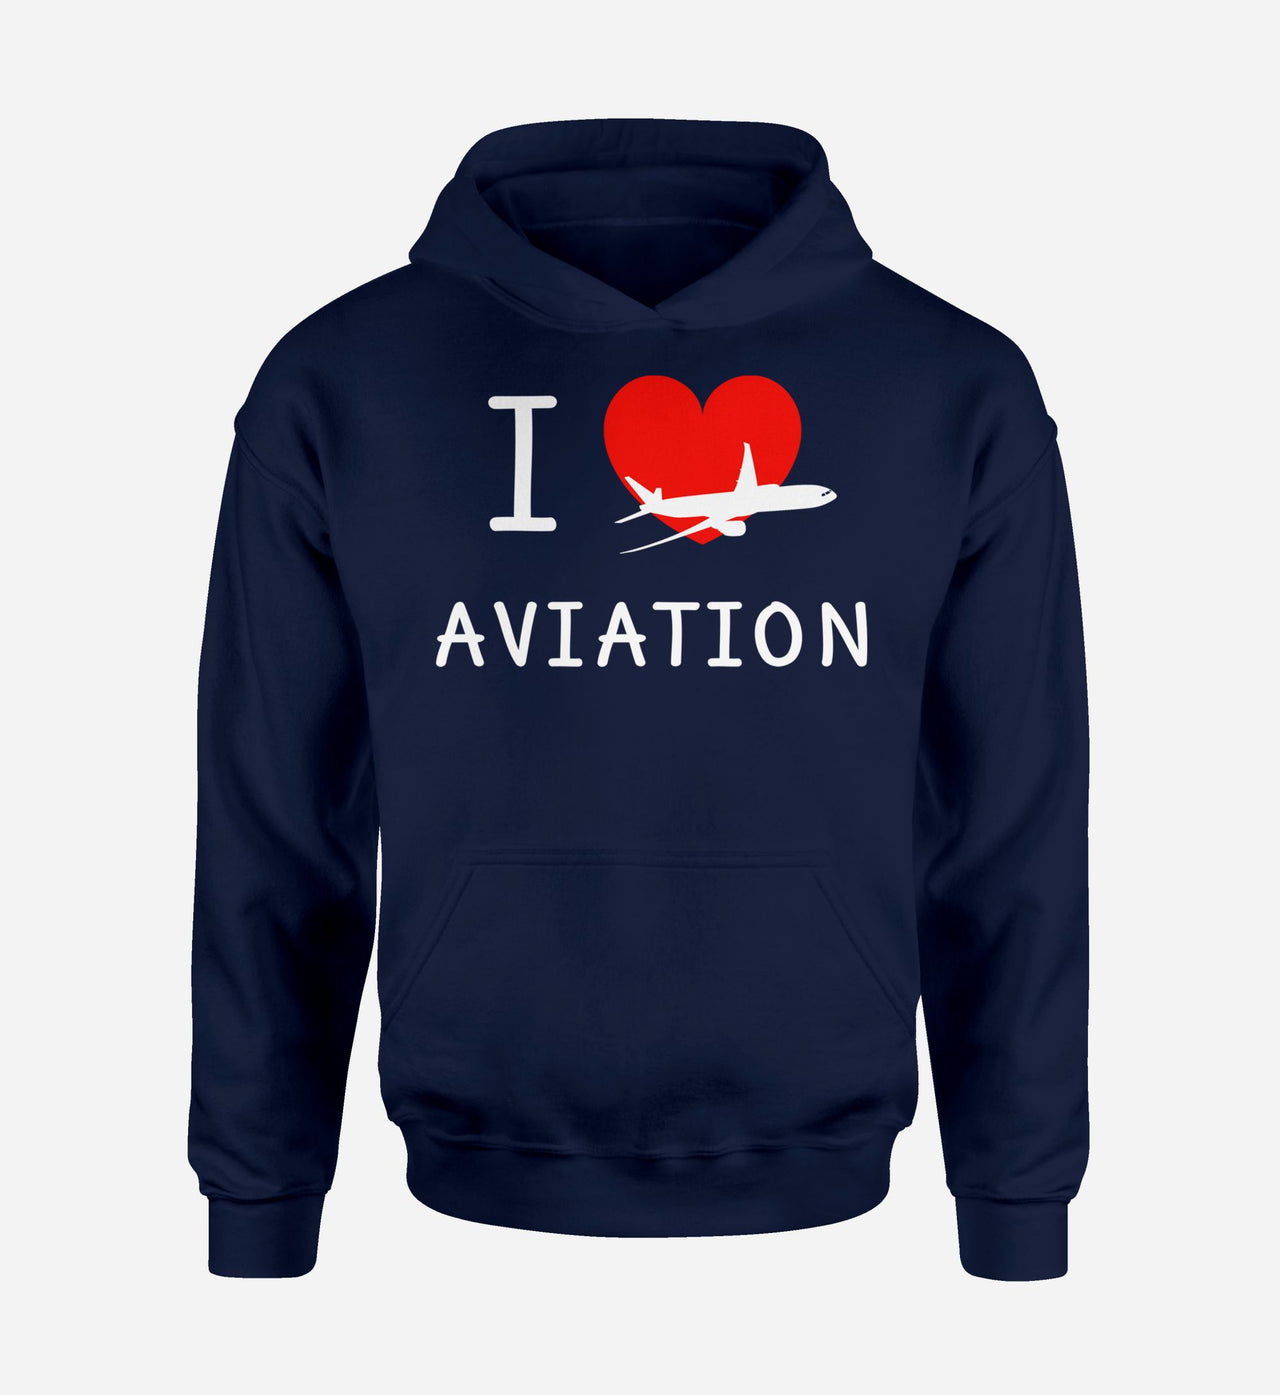 I Love Aviation Designed Hoodies